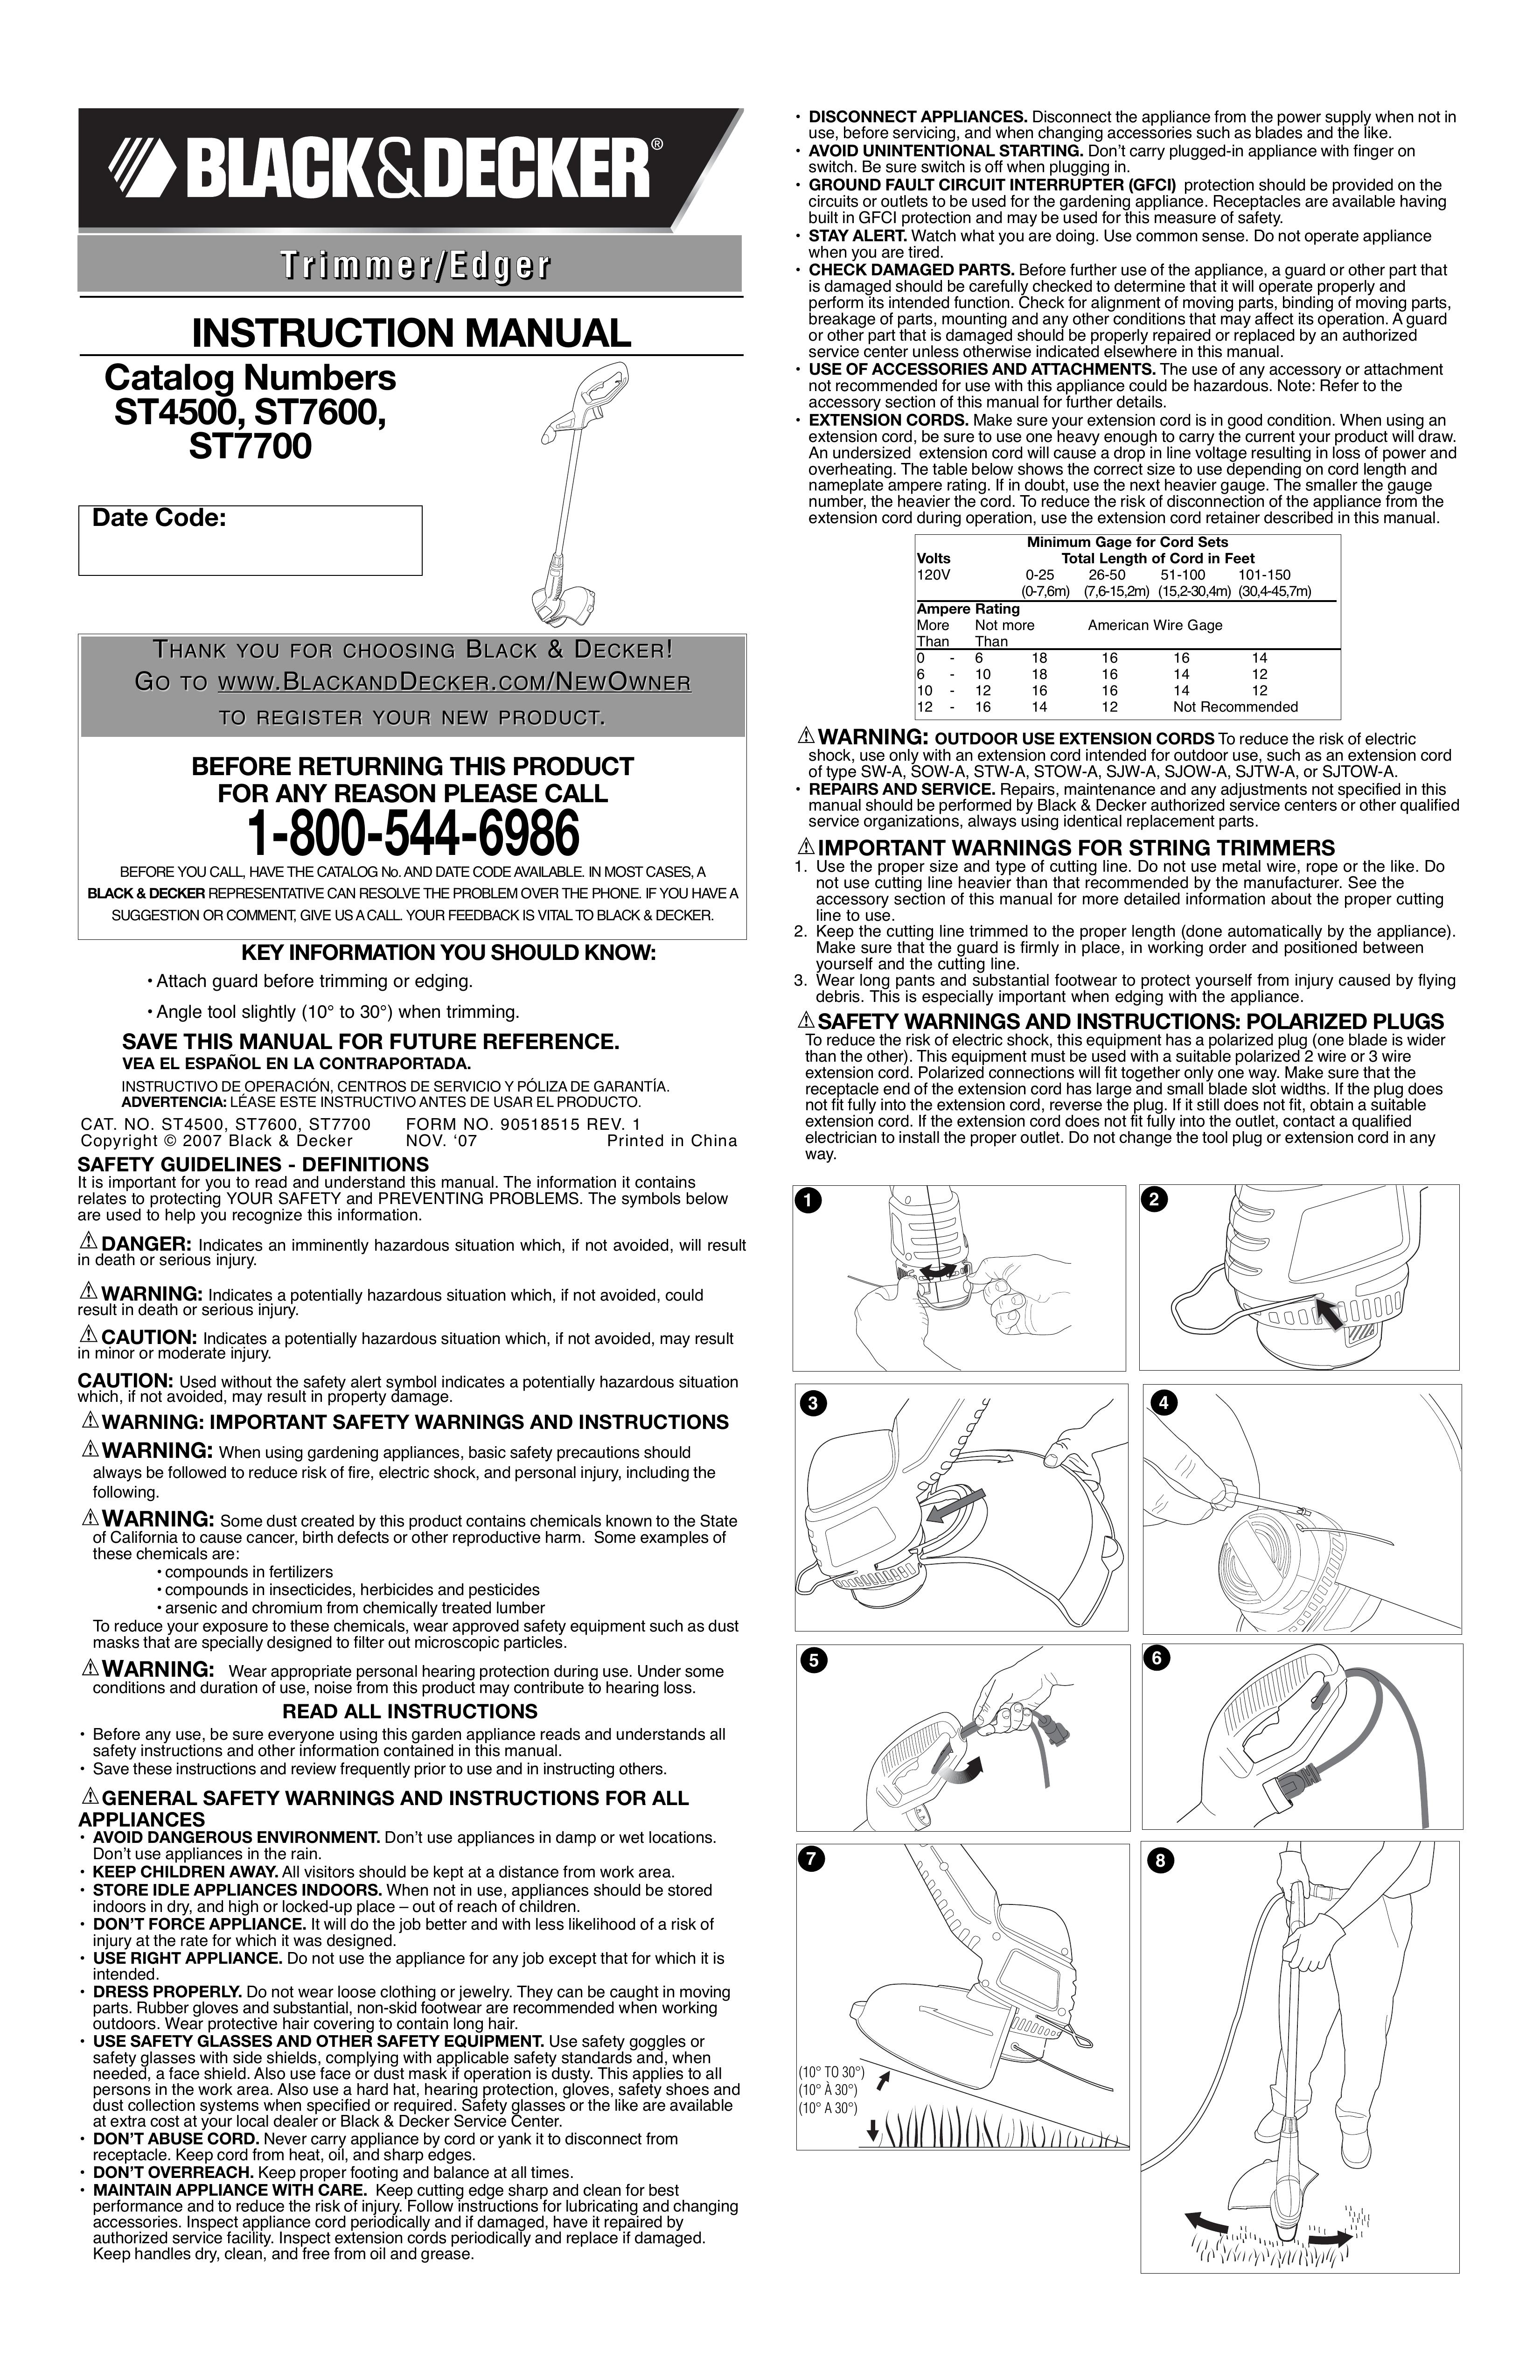 Black & Decker 90518515 Trimmer User Manual